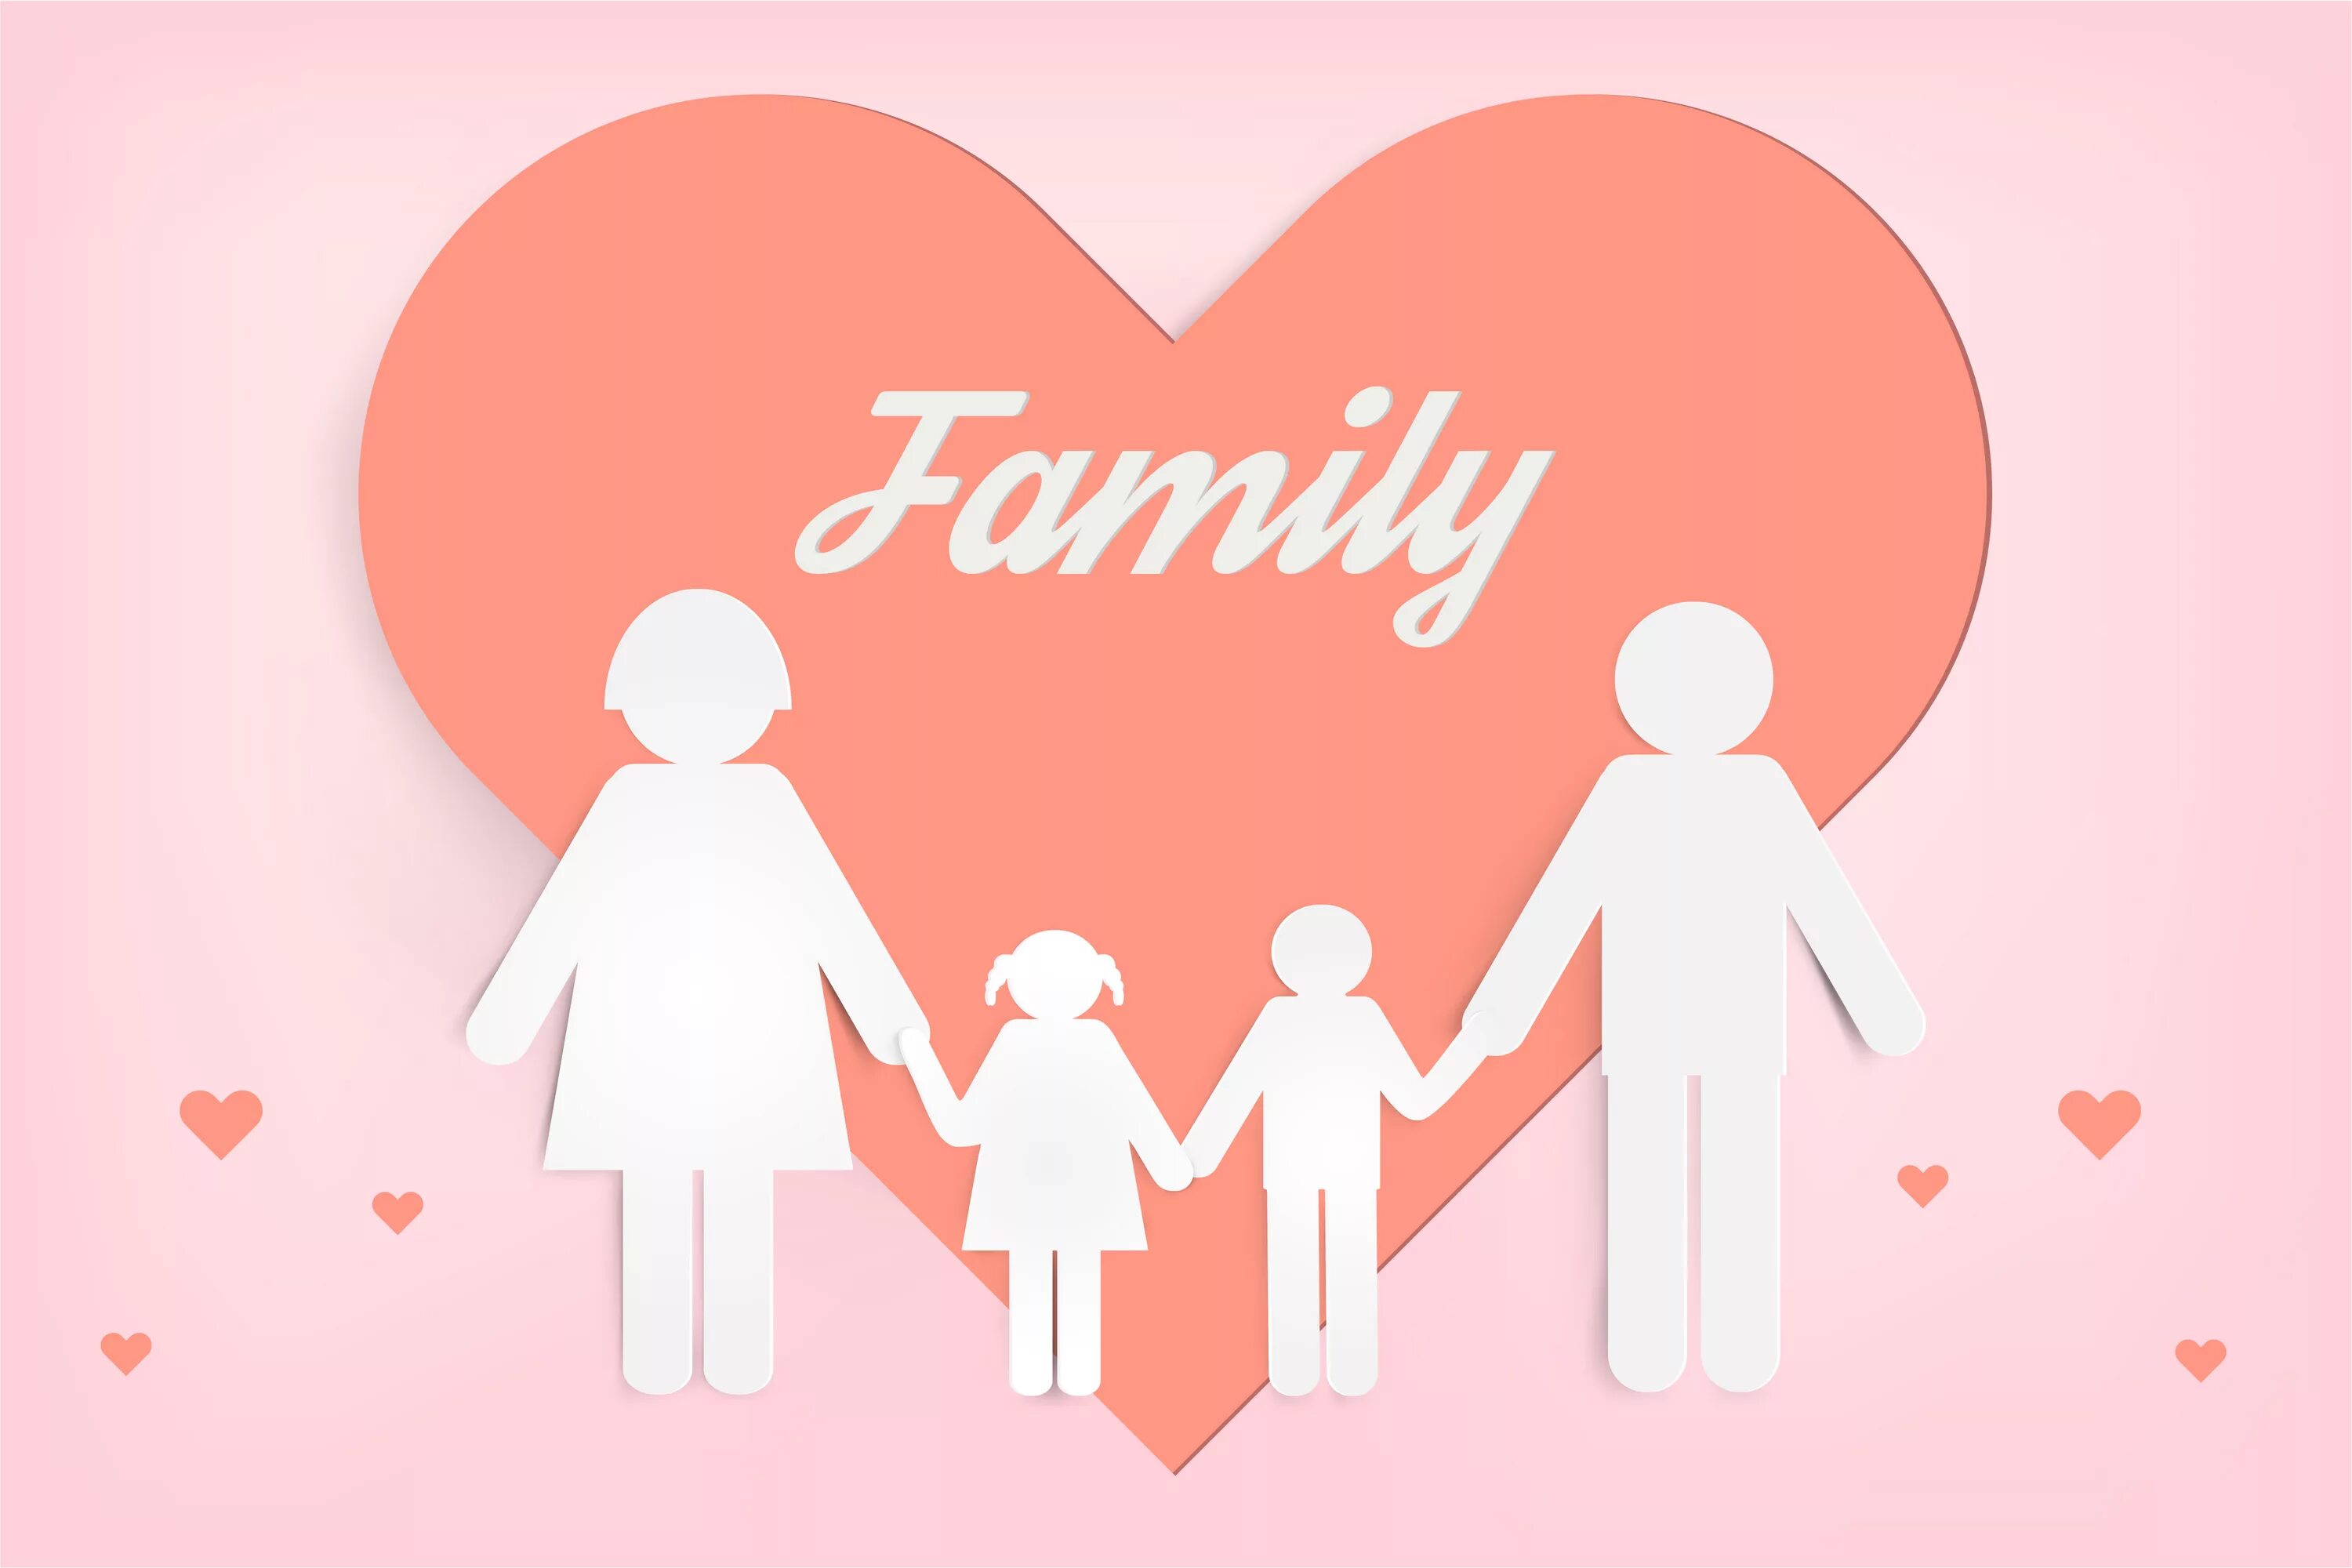 Go love family. Любовь семья дети фон. Happy Family Day of Love and Loyalty. Семья любовь фон для афиши. Love is семья.